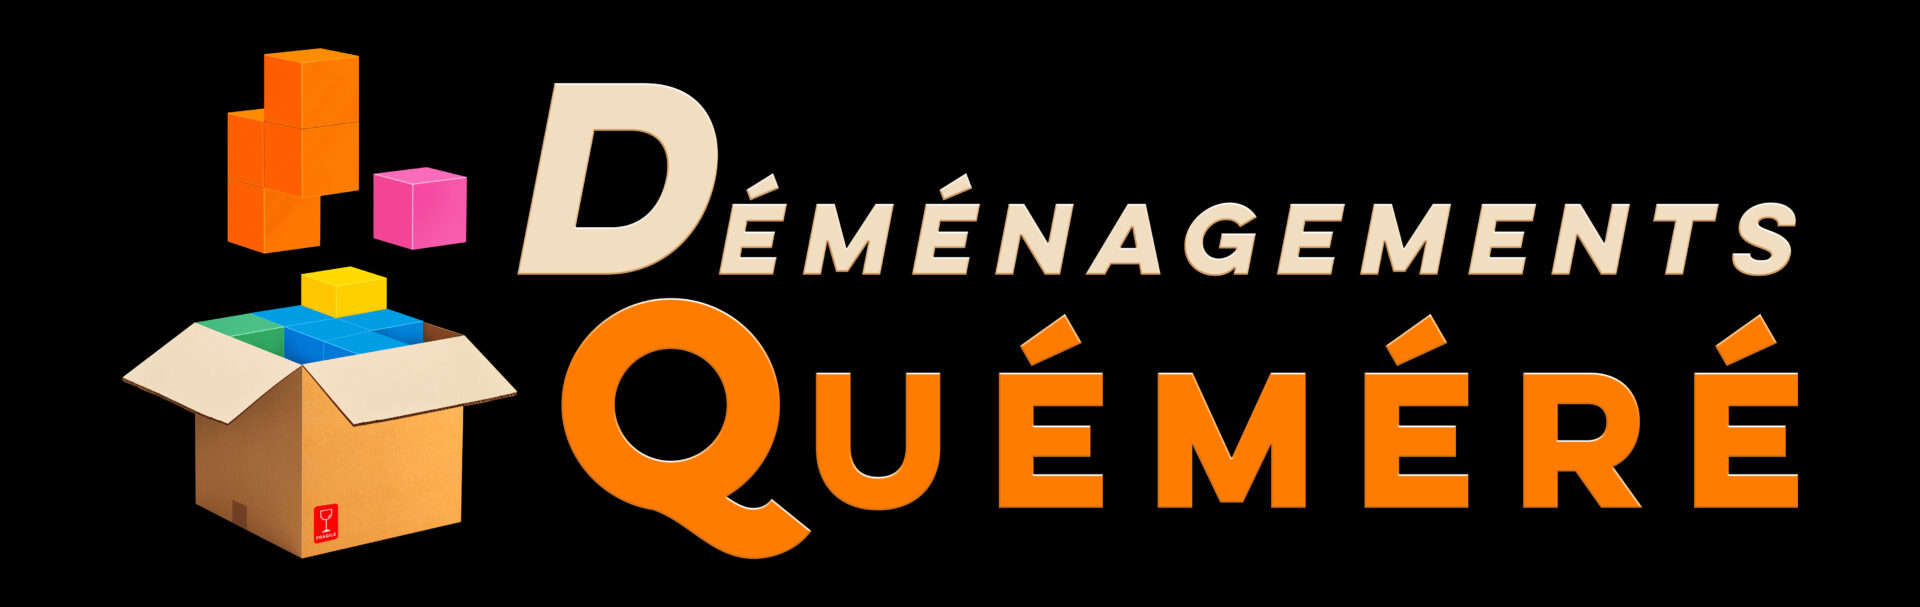 Demenagements Quemere Demenageur Lannion Logo HD Fond Noir